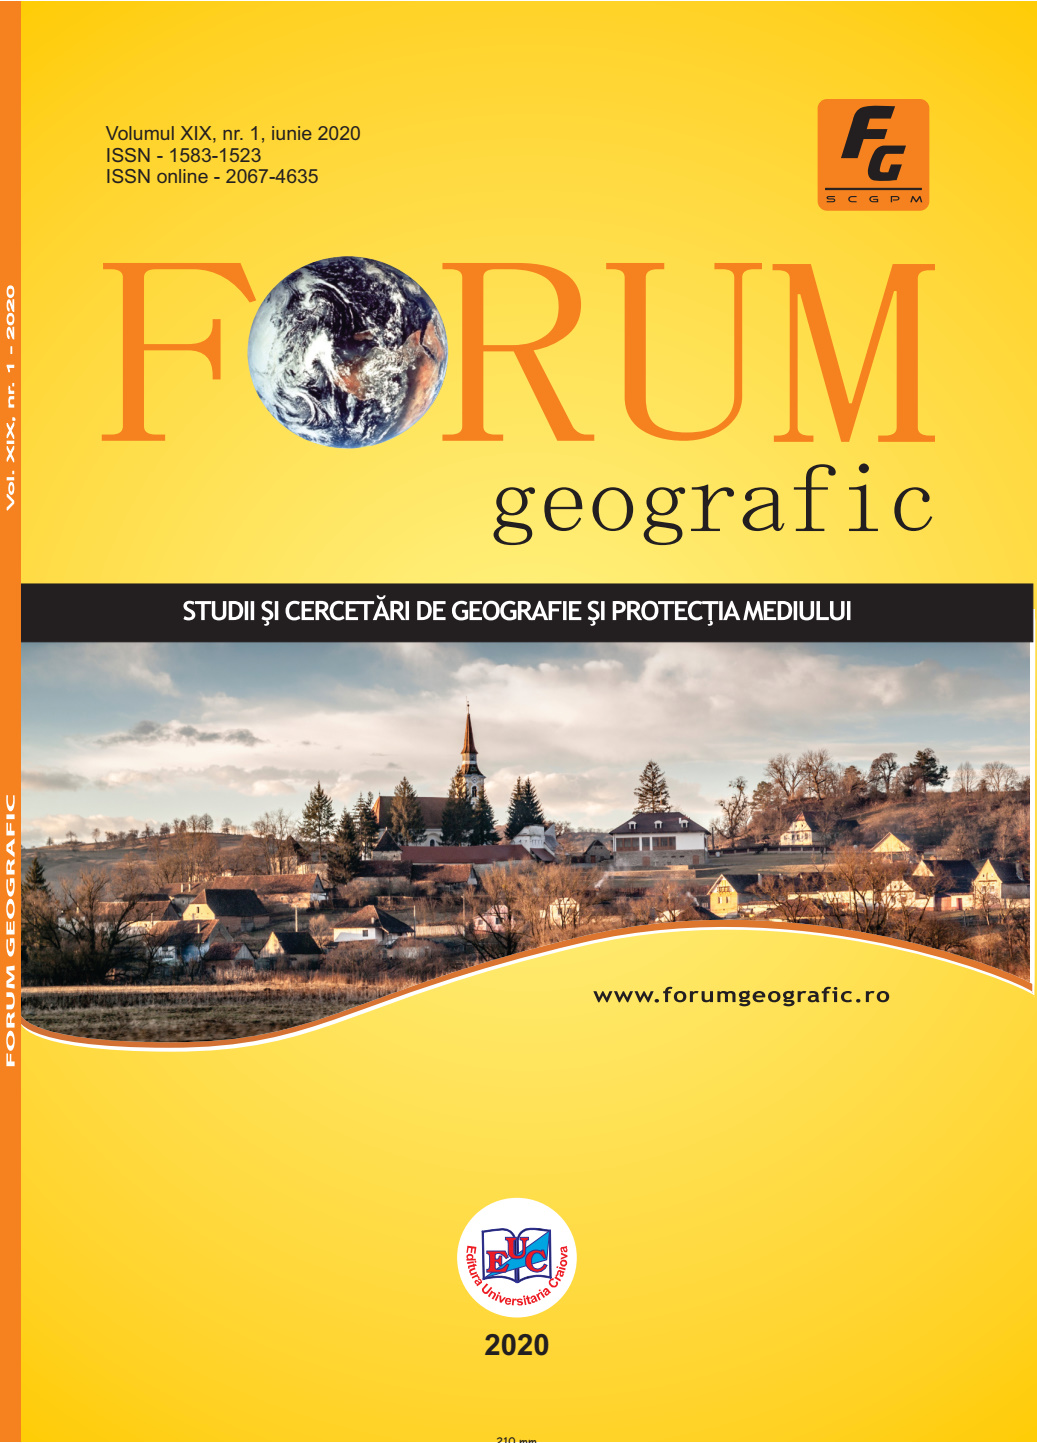 Forum geografic: Volume XIX, issue 1